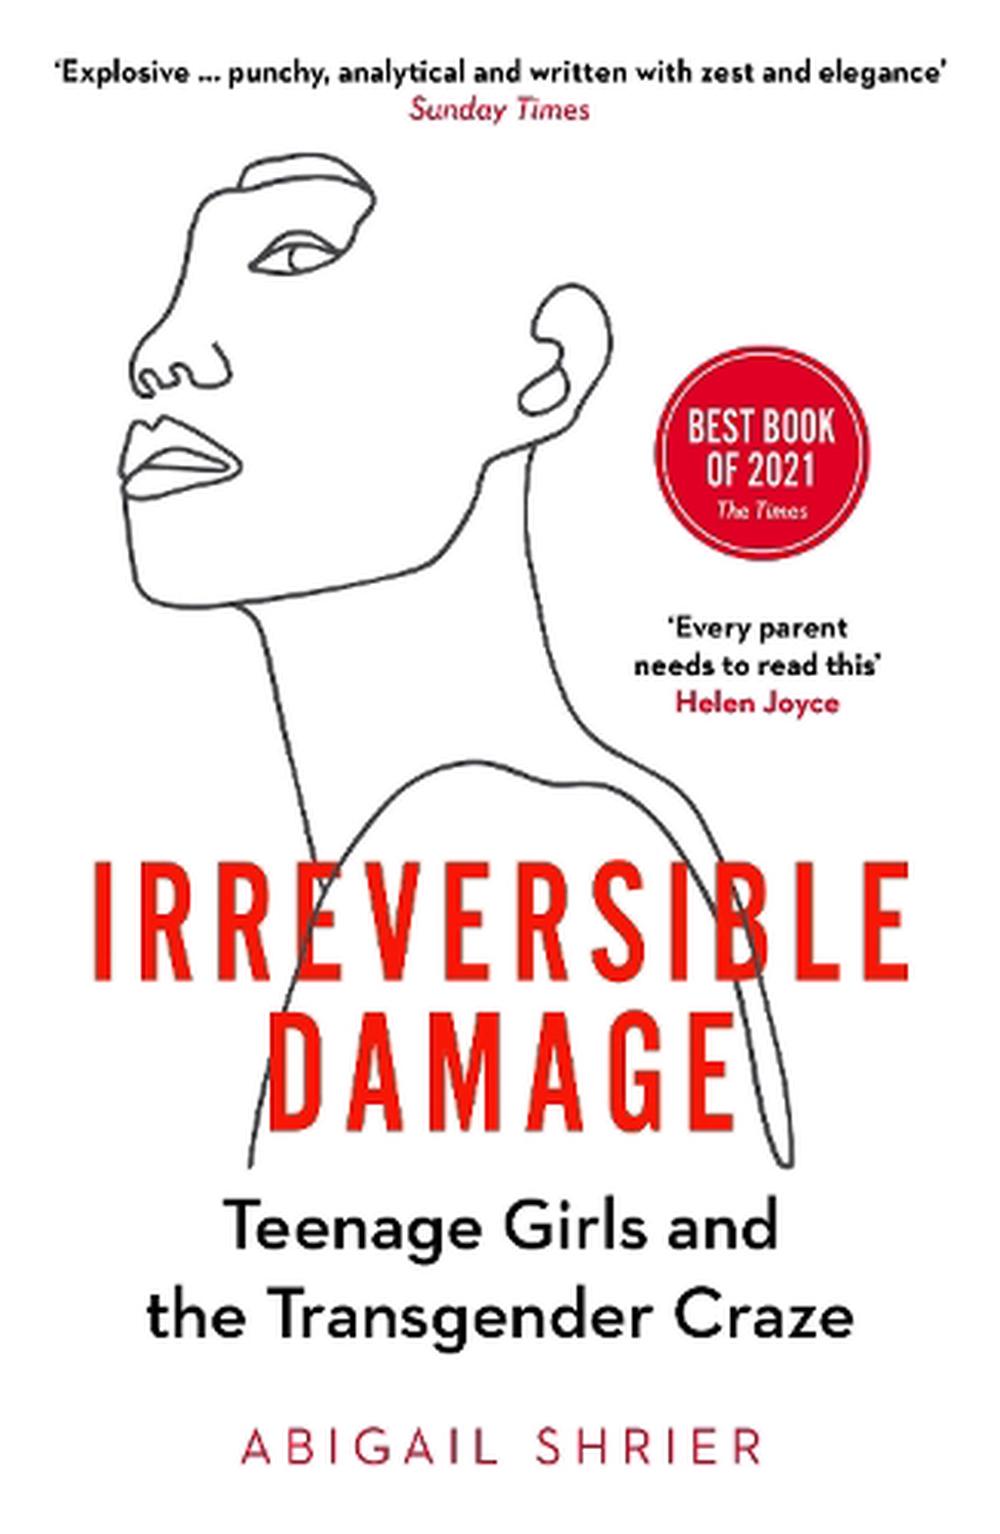 Irreversible Damage by Abigail Shrier, Paperback, 9781800750364 Buy